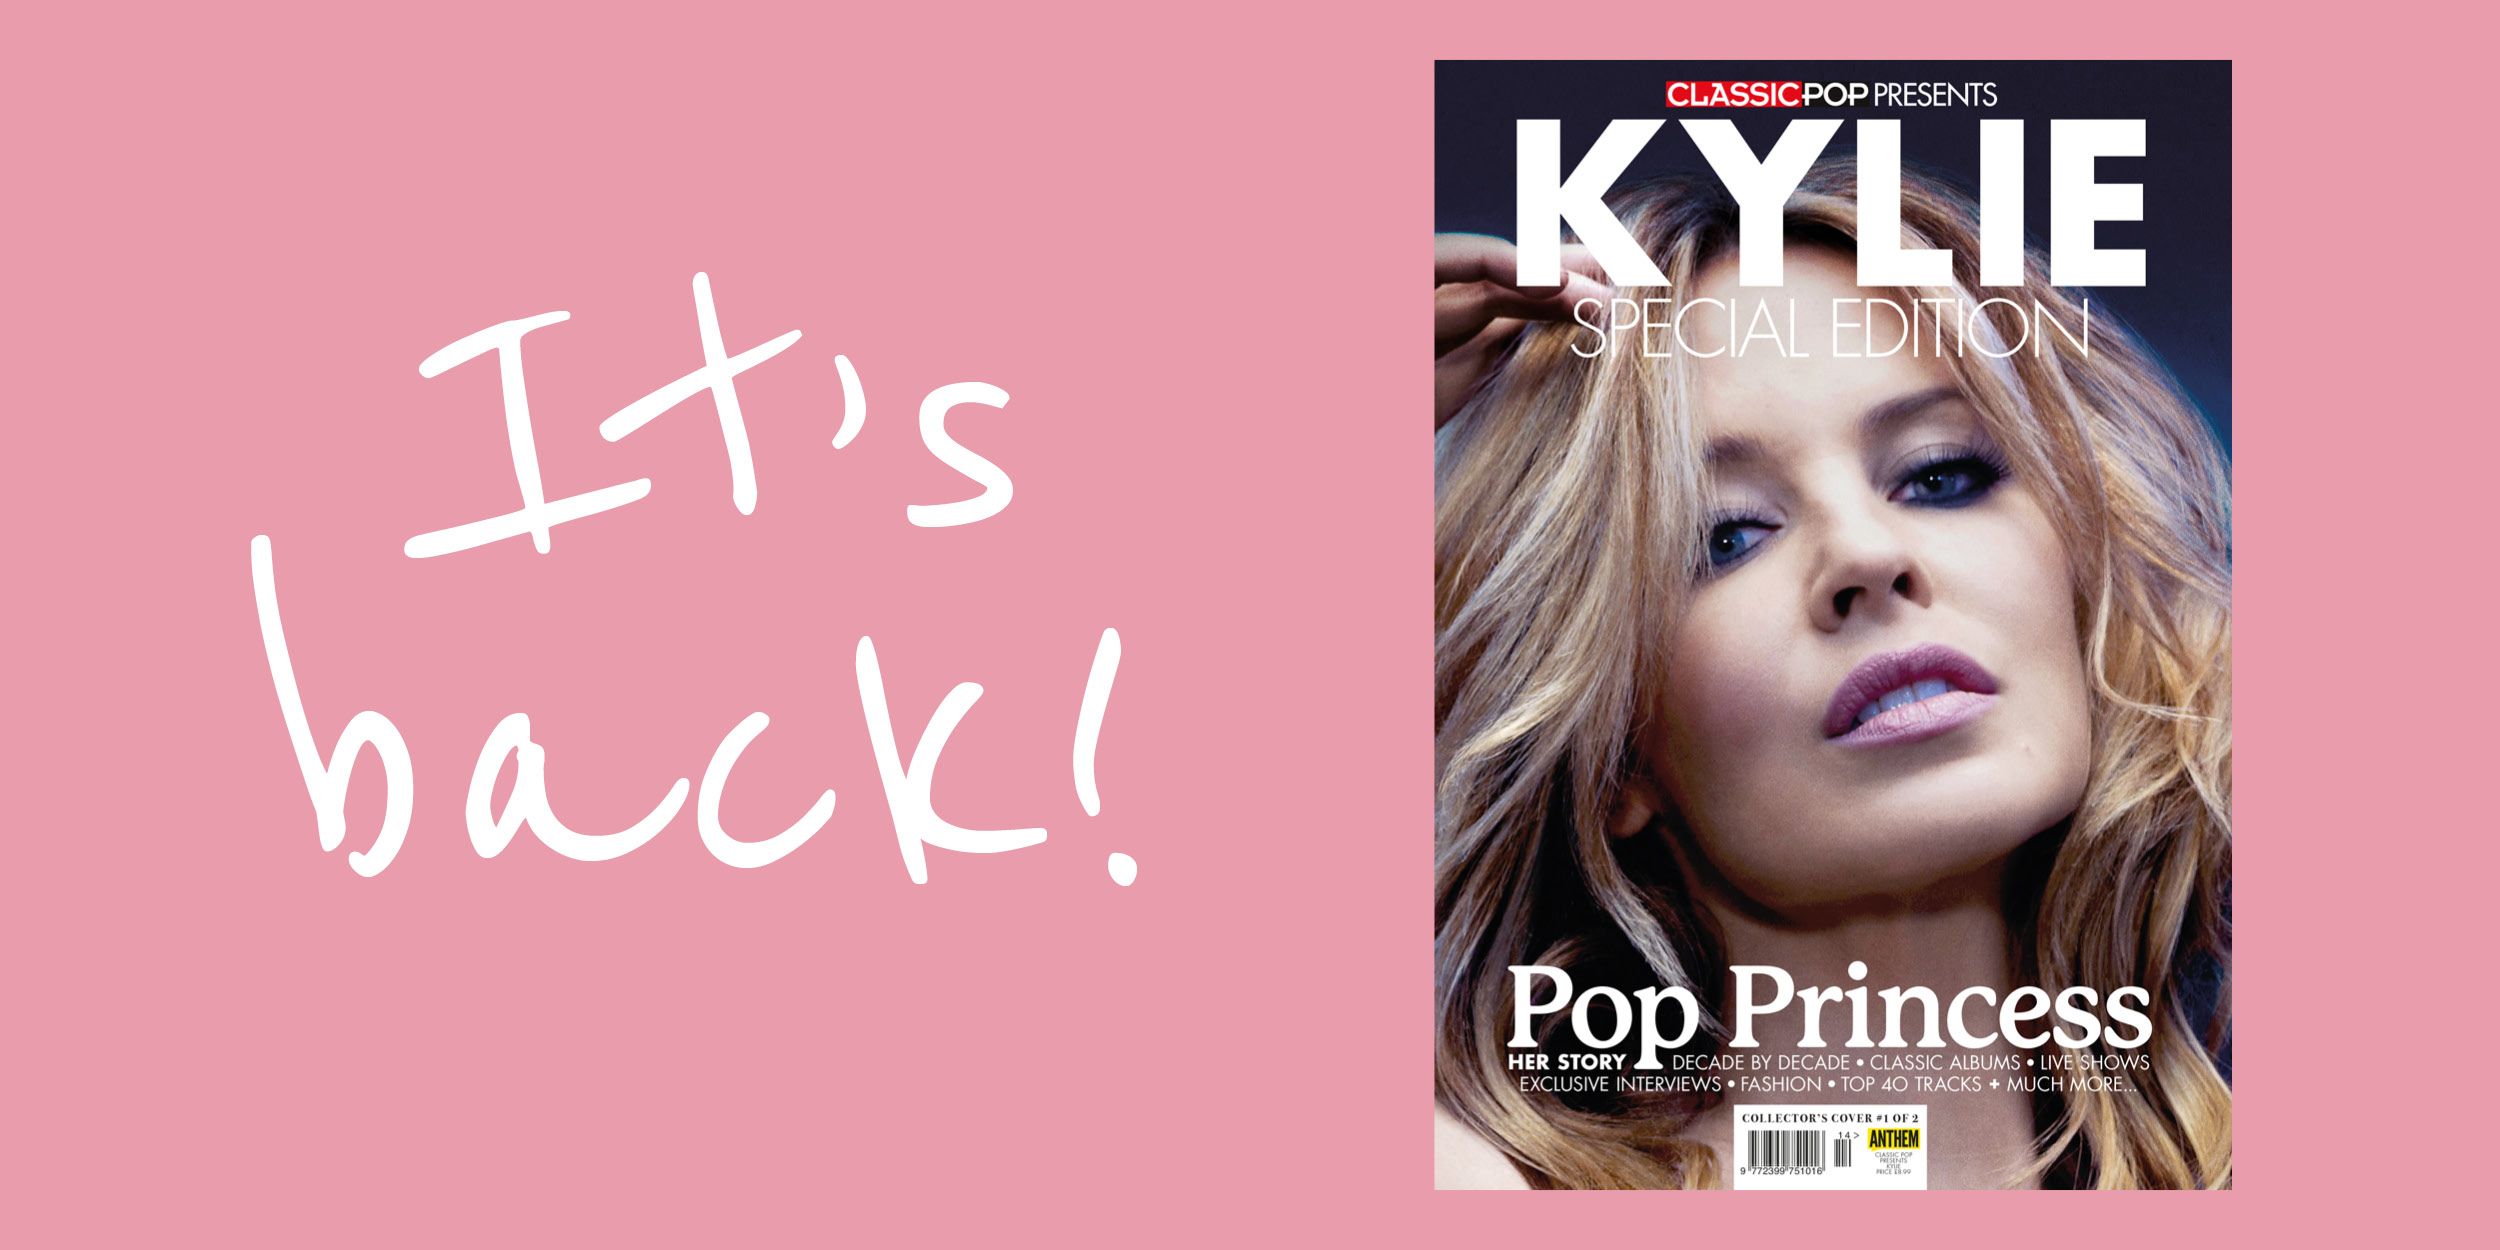 Classic Pop Presents Kylie